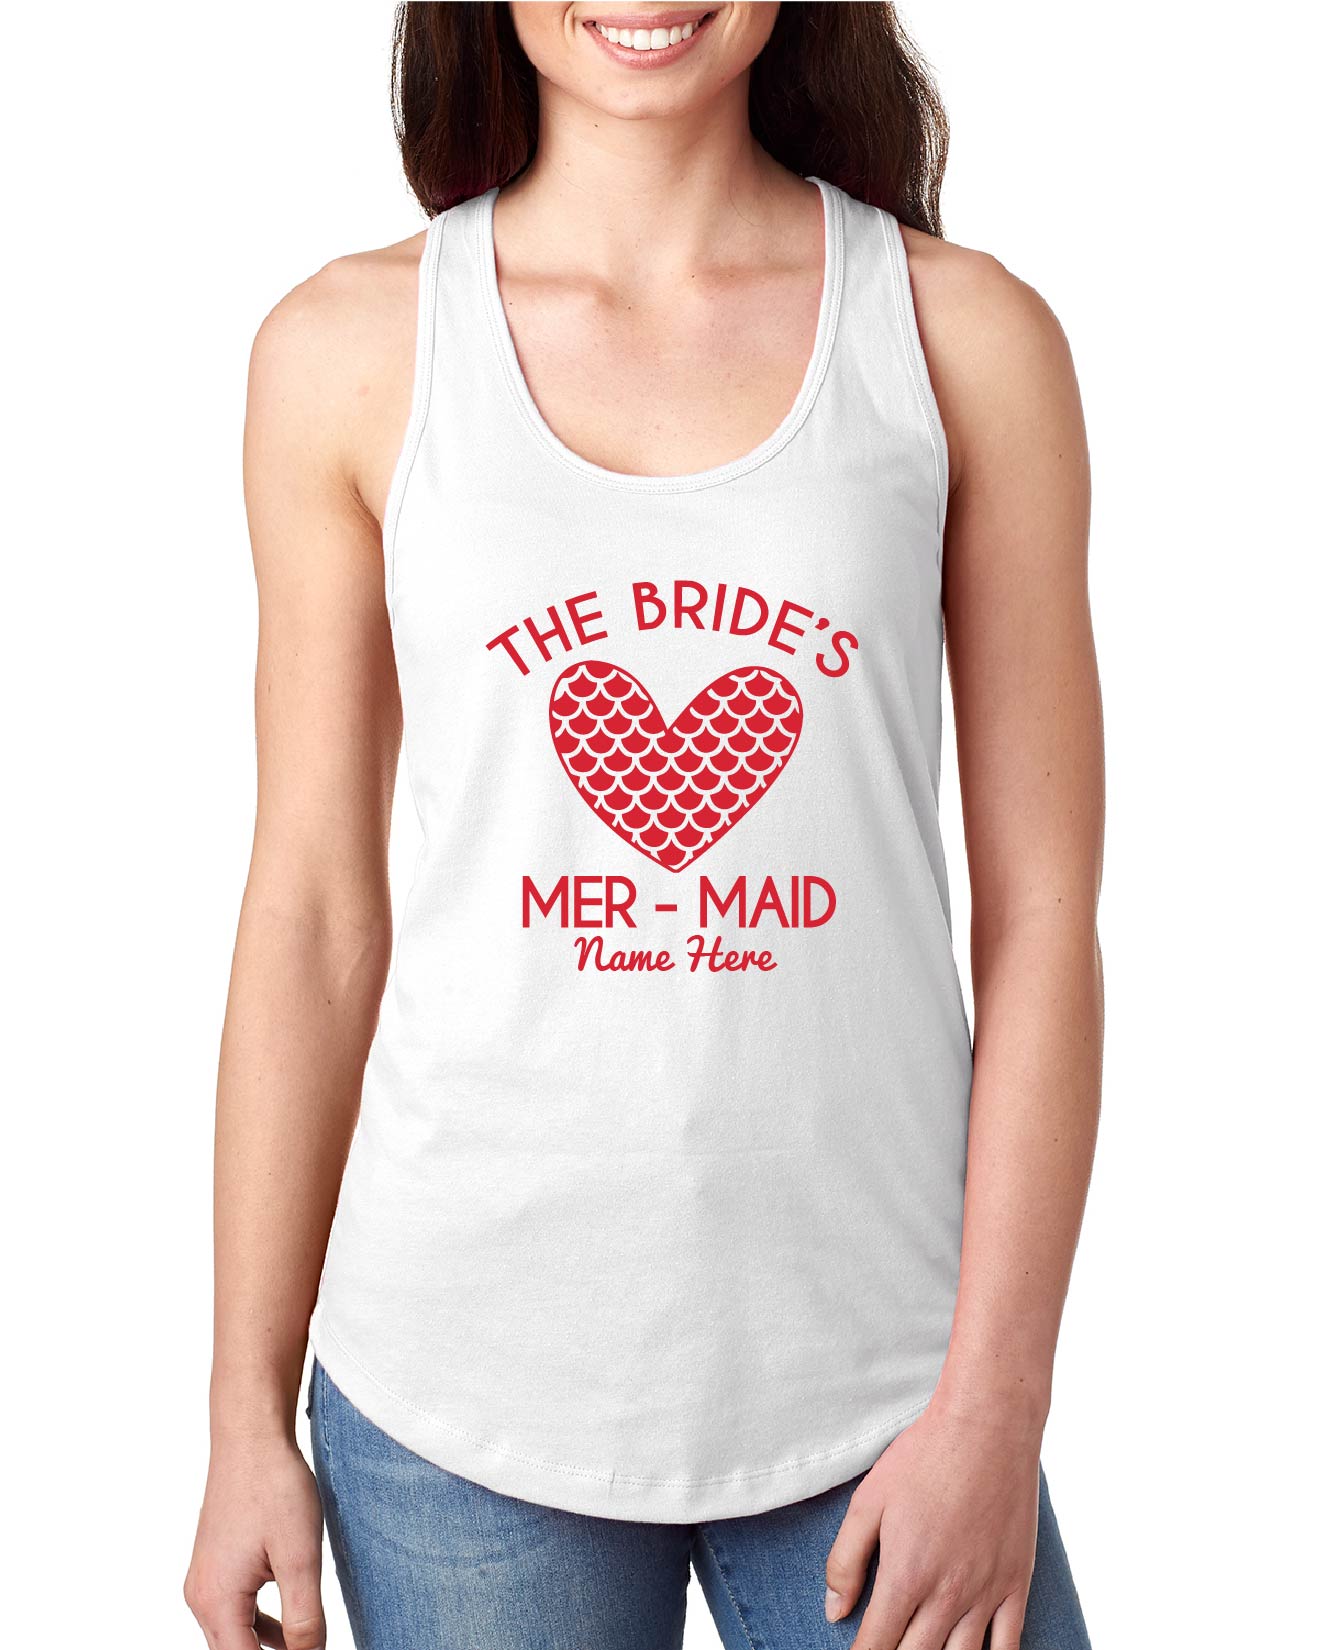 Bride's Mer-Maid Tank